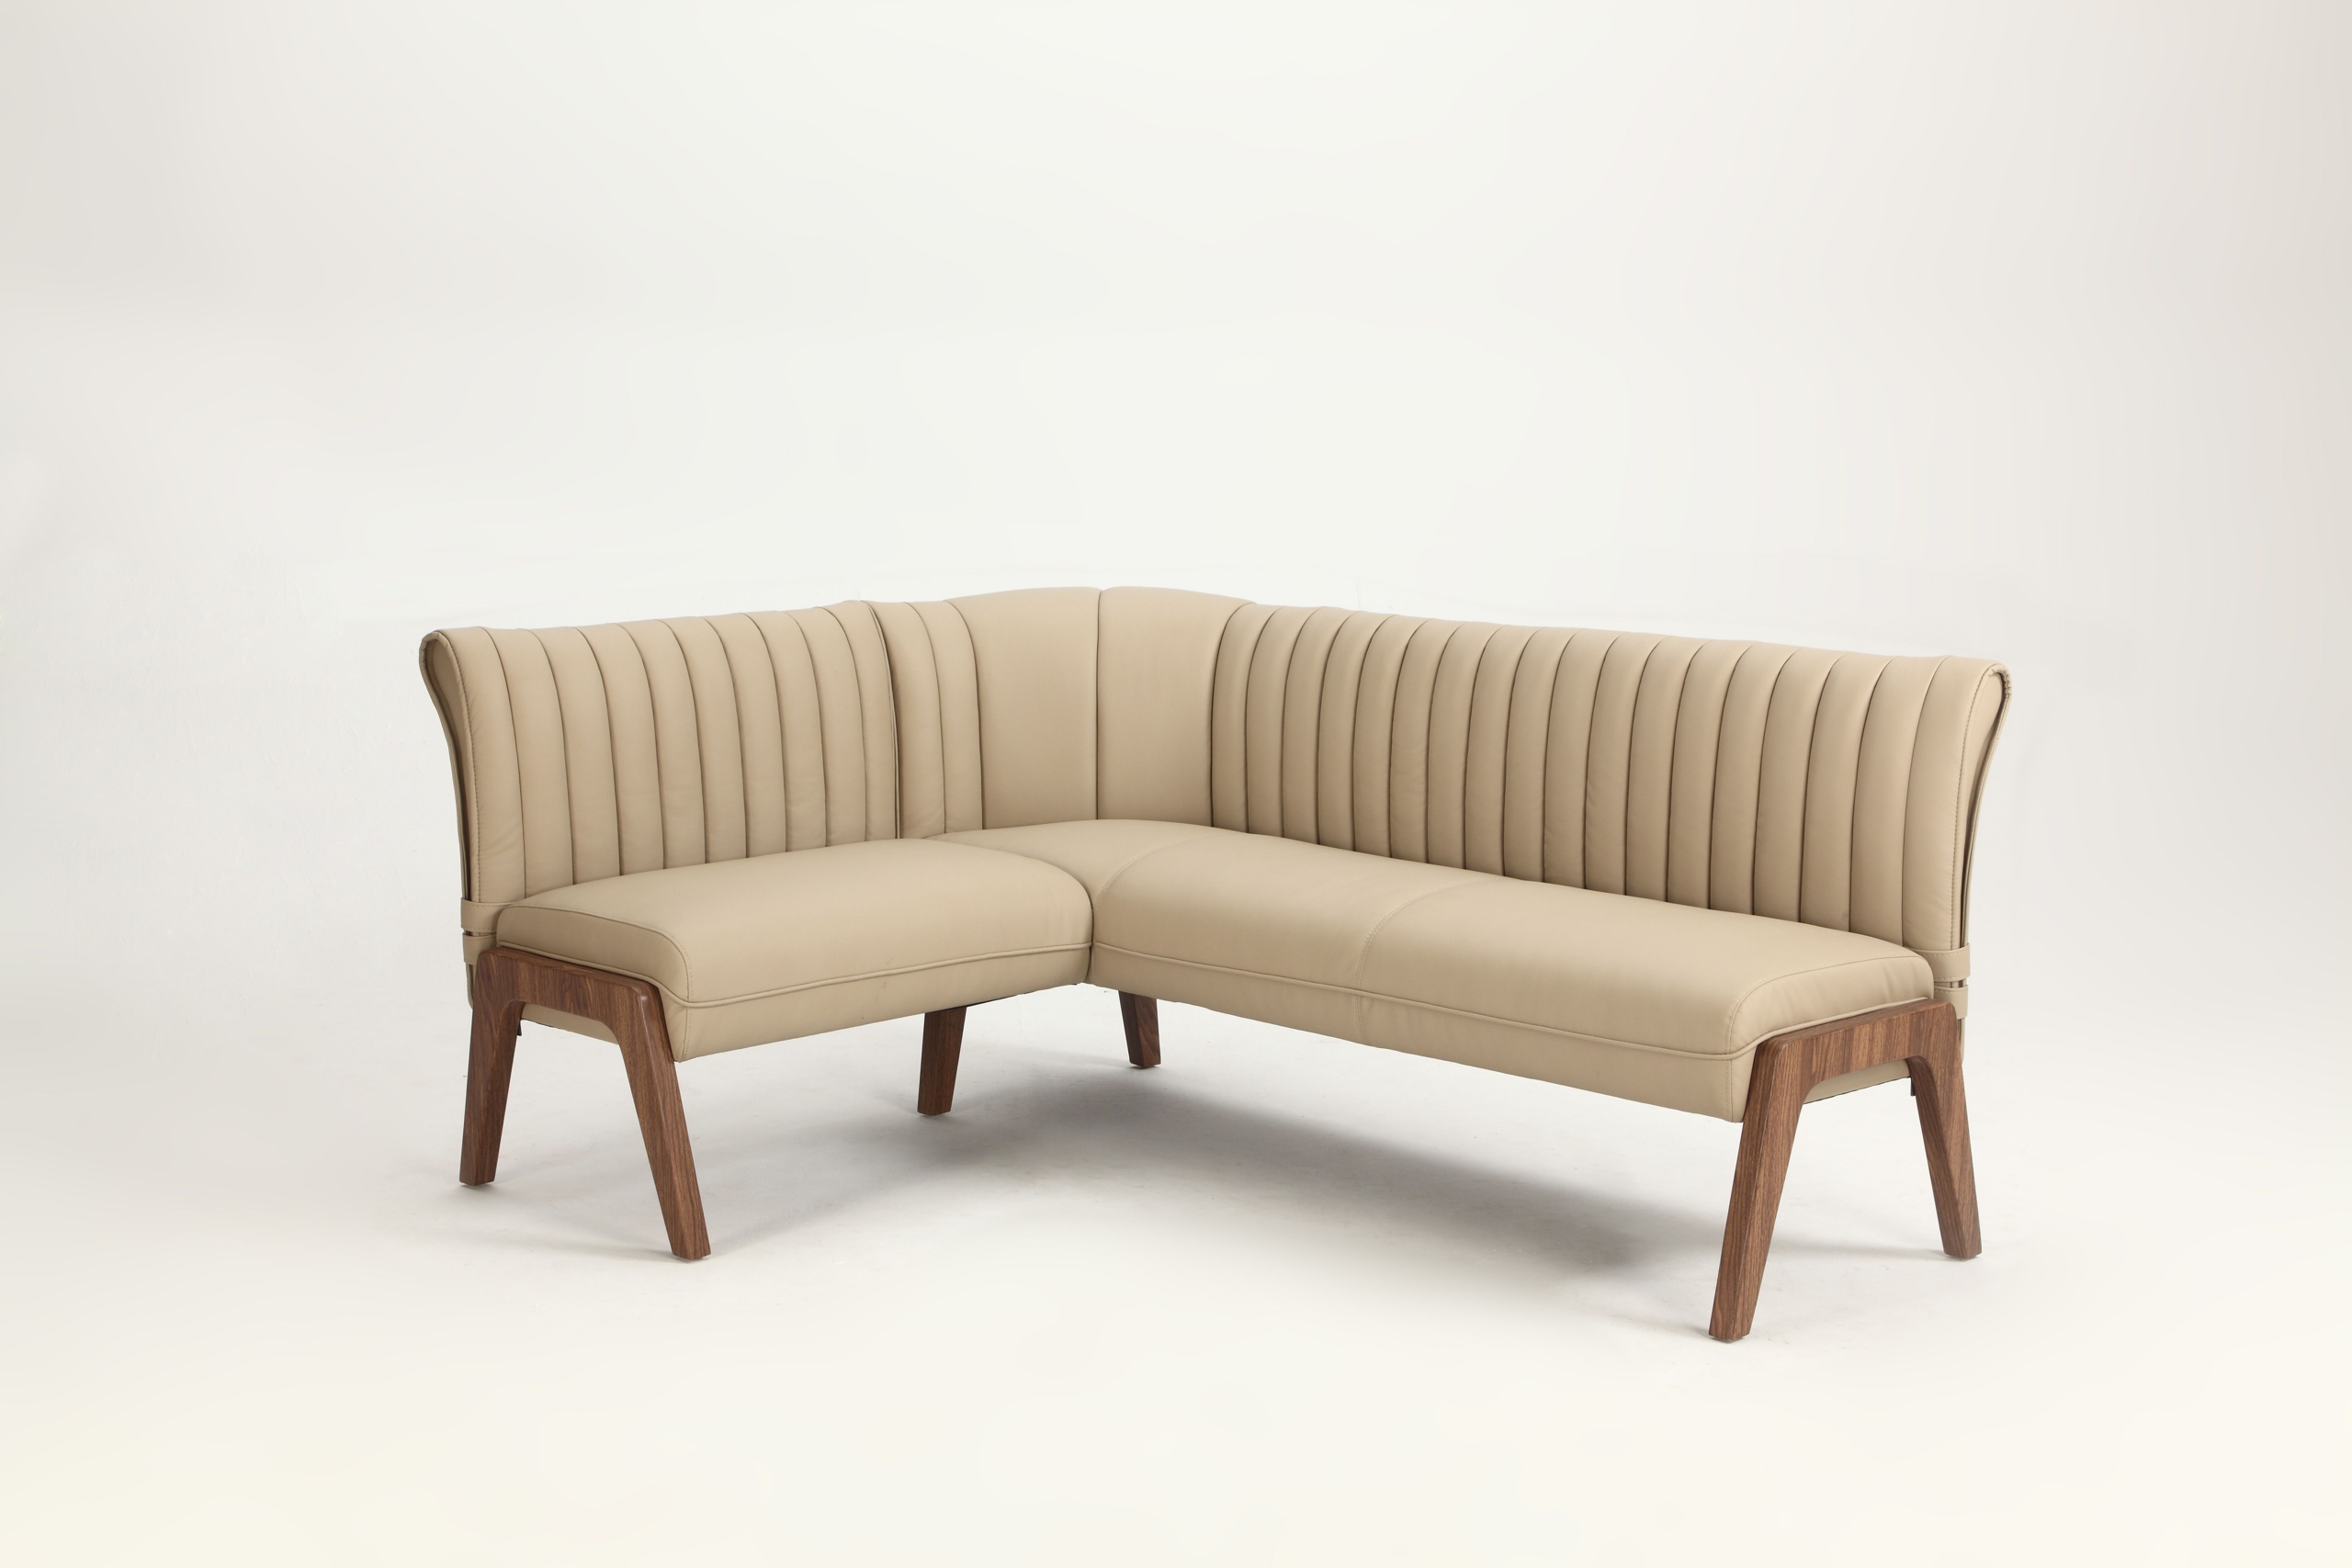 Elegant Corner Bench With Upholstered Seats